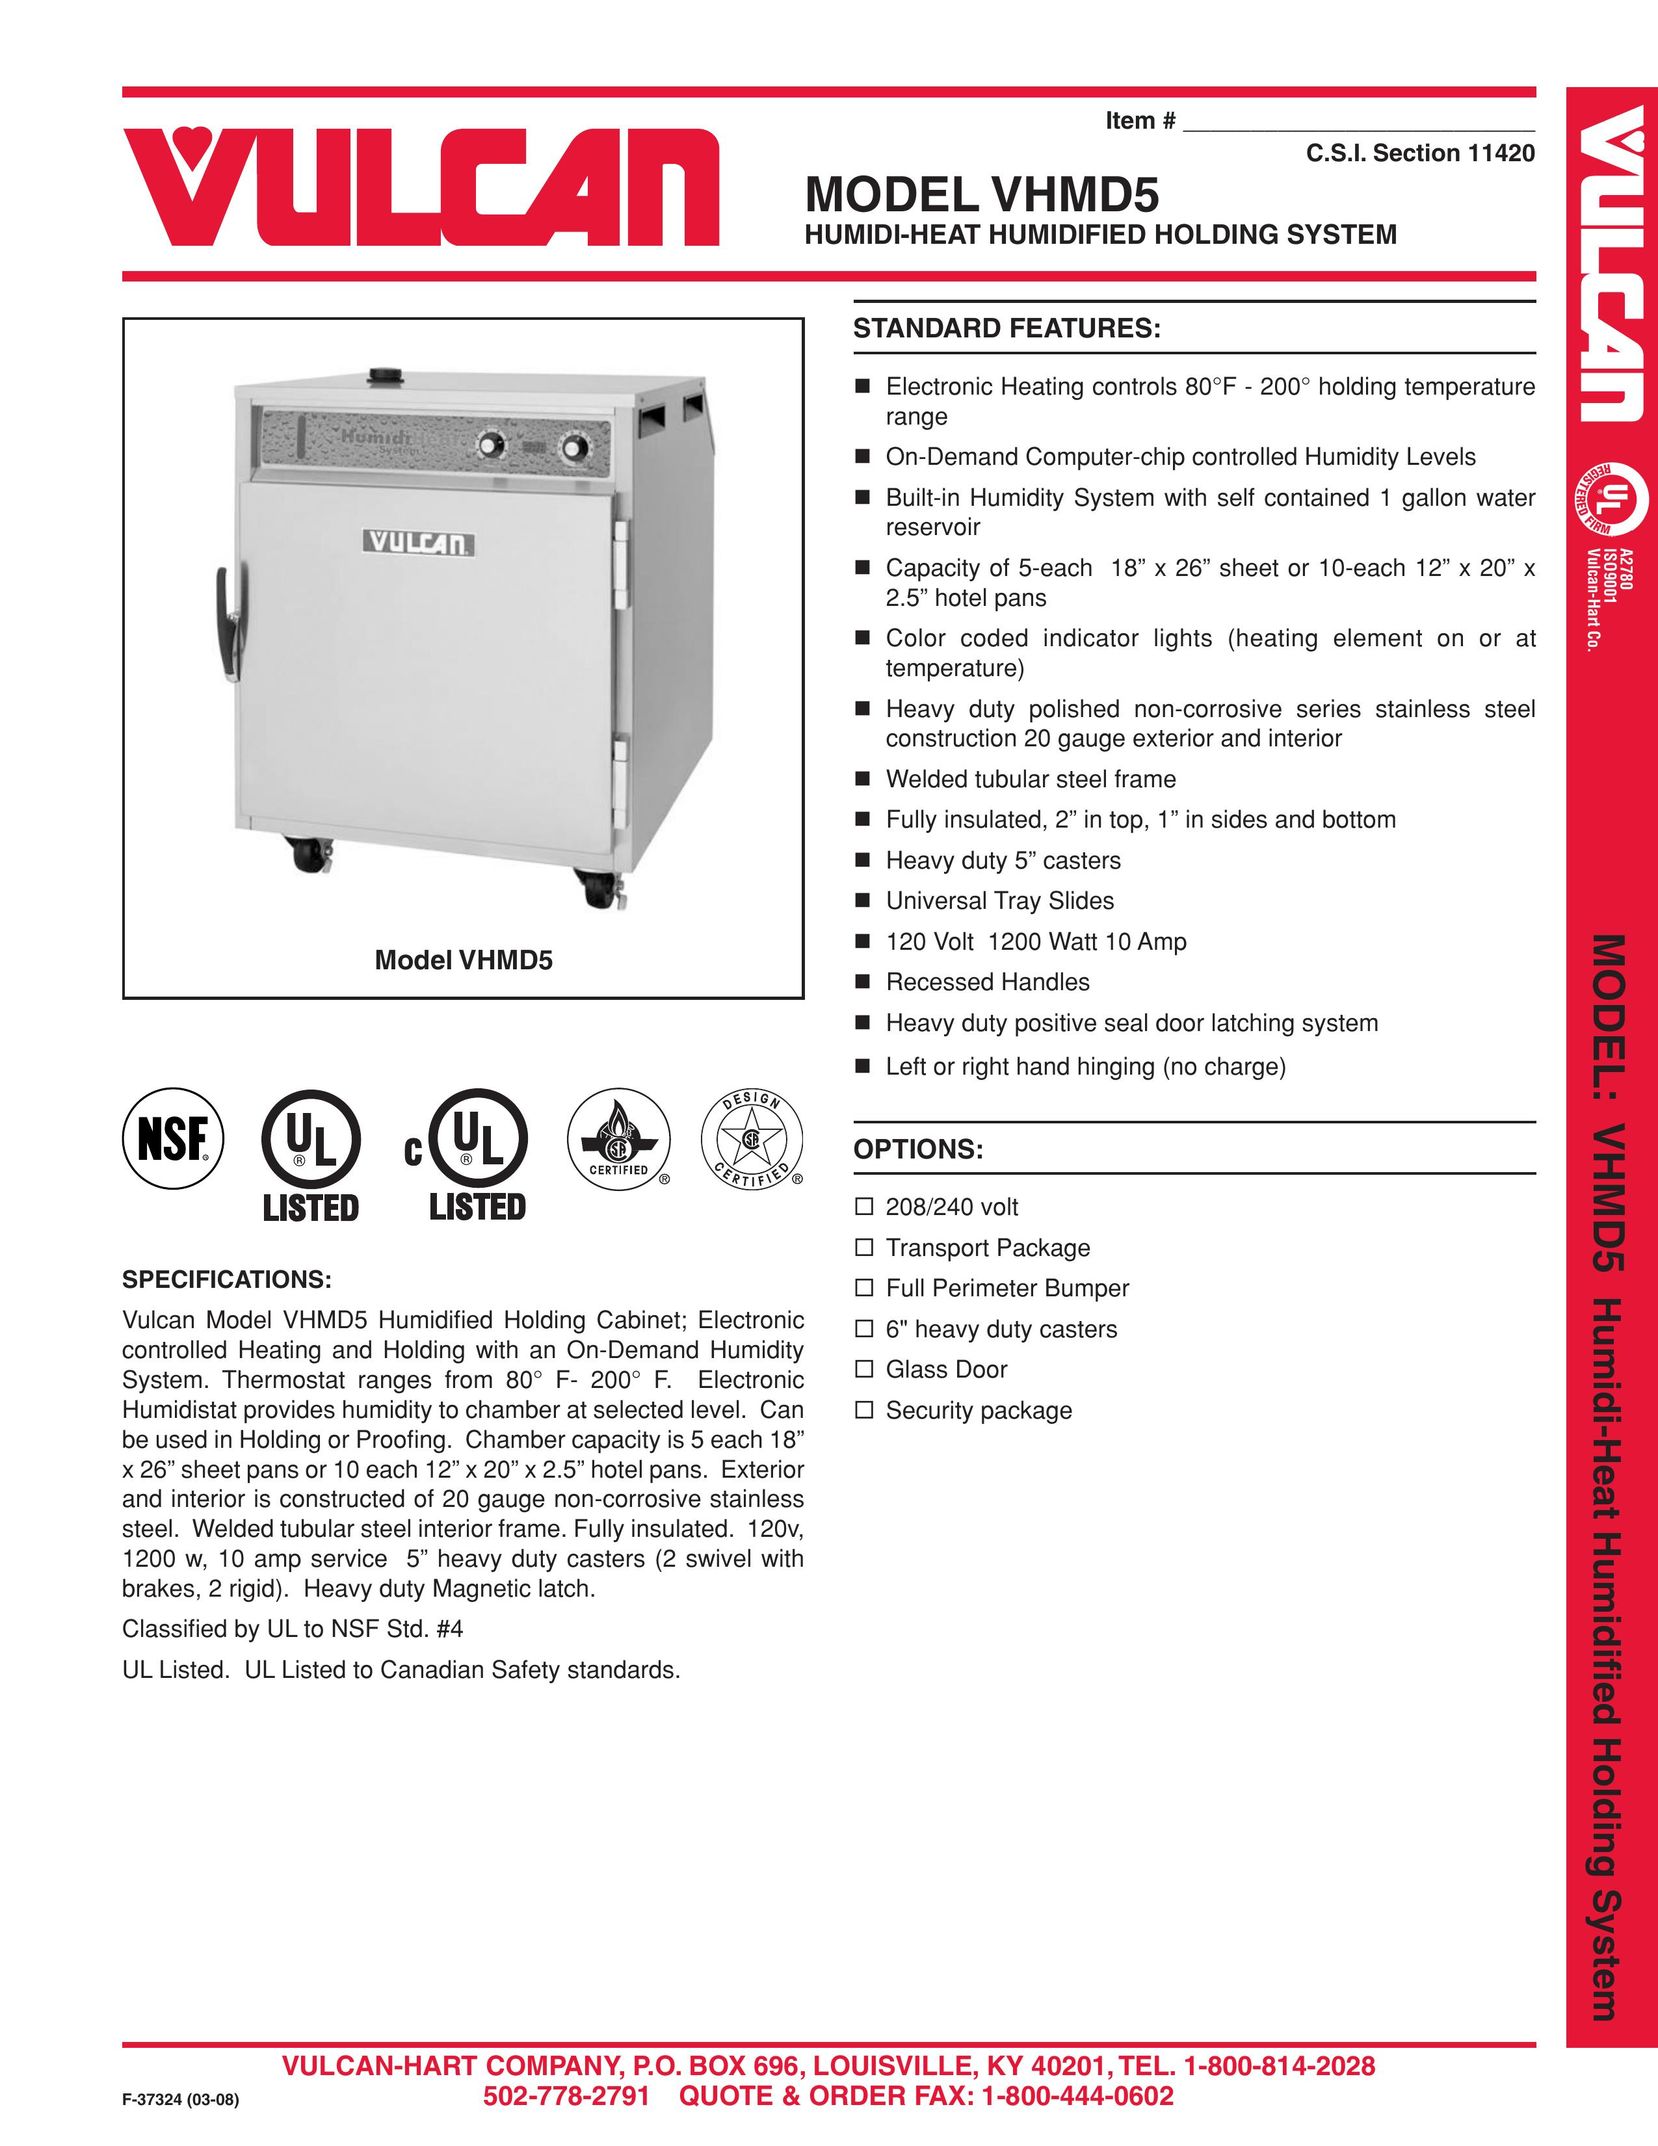 Vulcan-Hart VHMD5 Humidifier User Manual